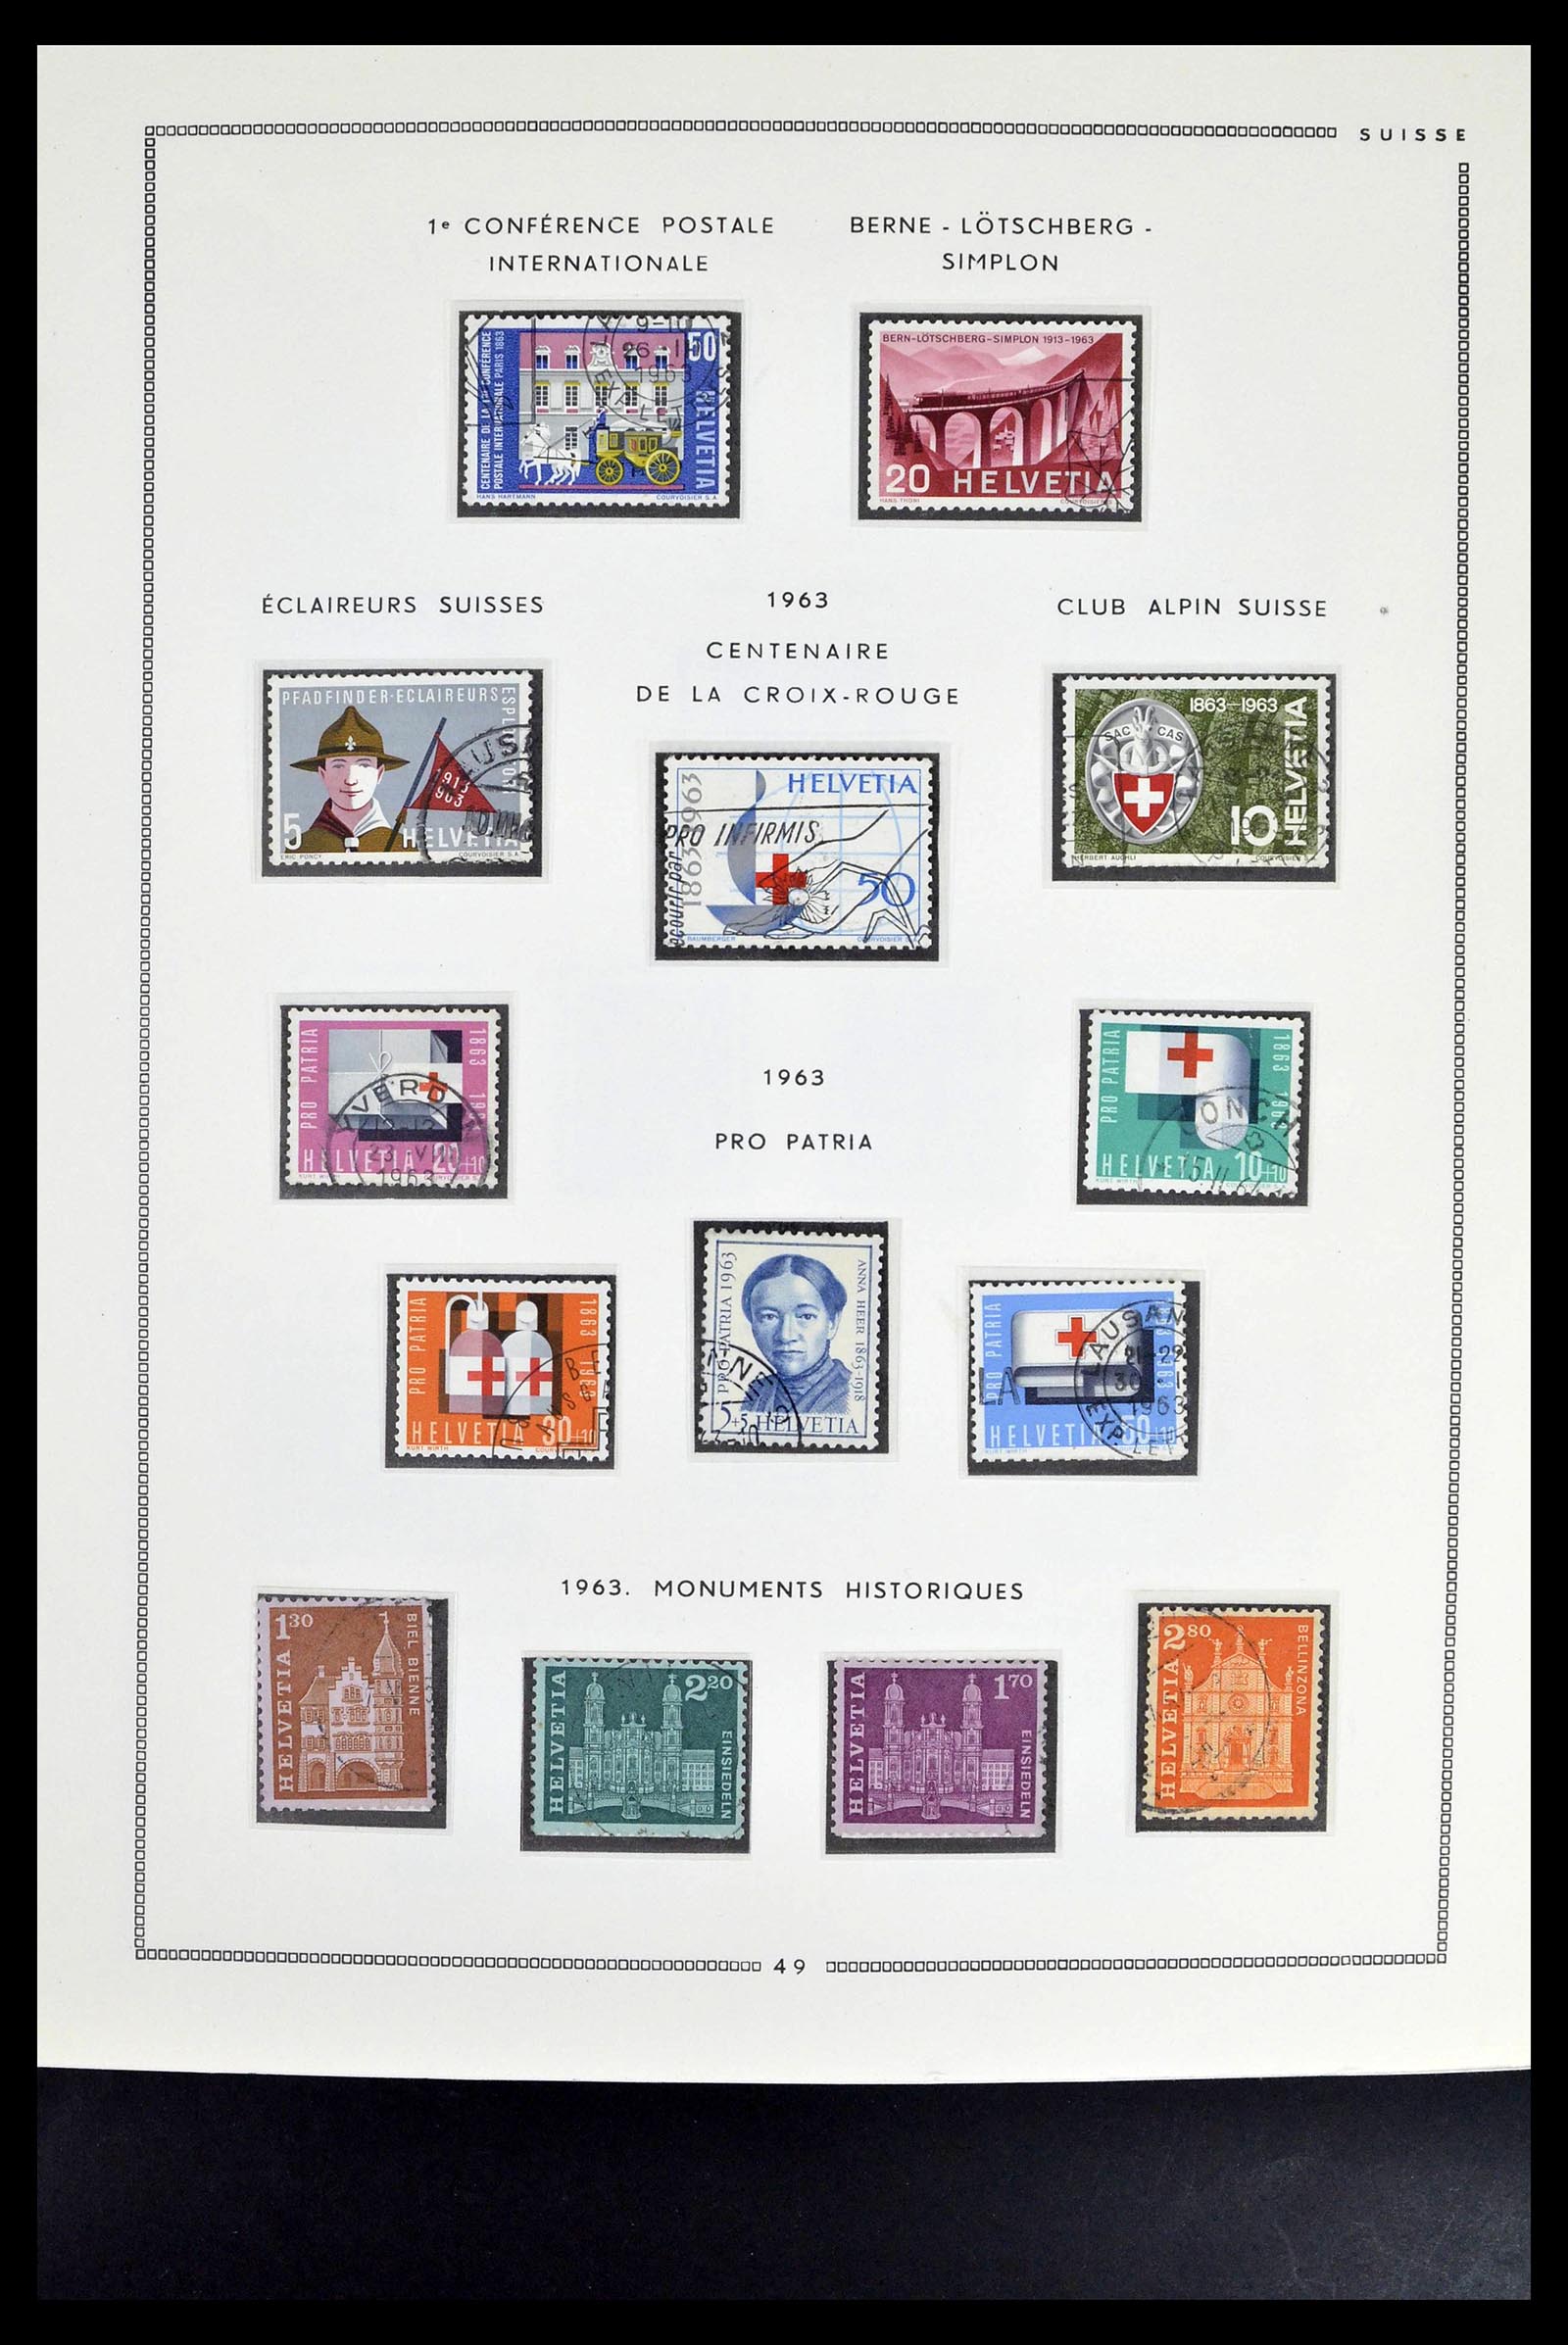 39094 0047 - Stamp collection 39094 Switzerland 1850-2005.